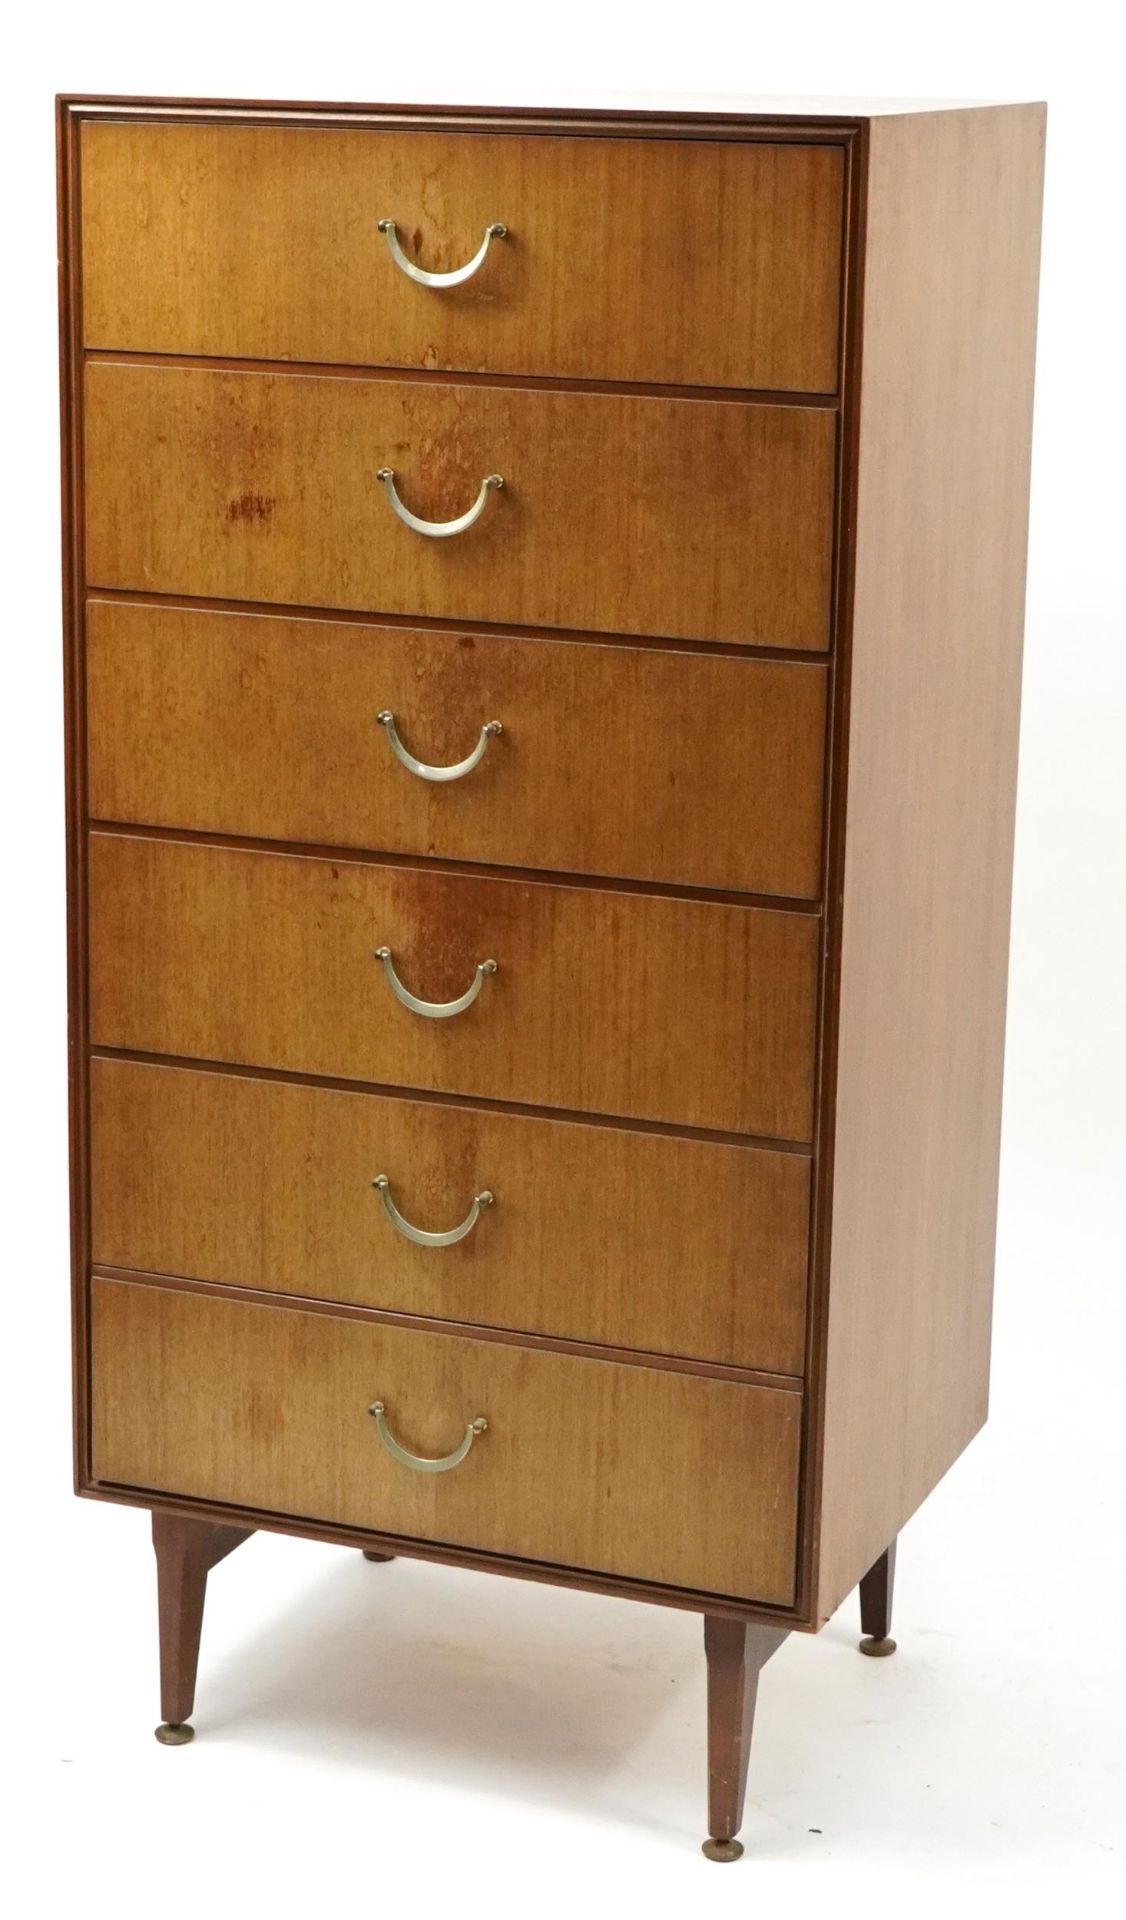 Vintage Meredew five drawer chest with brass handles, 127cm H x 61cm W x 45.5cm D